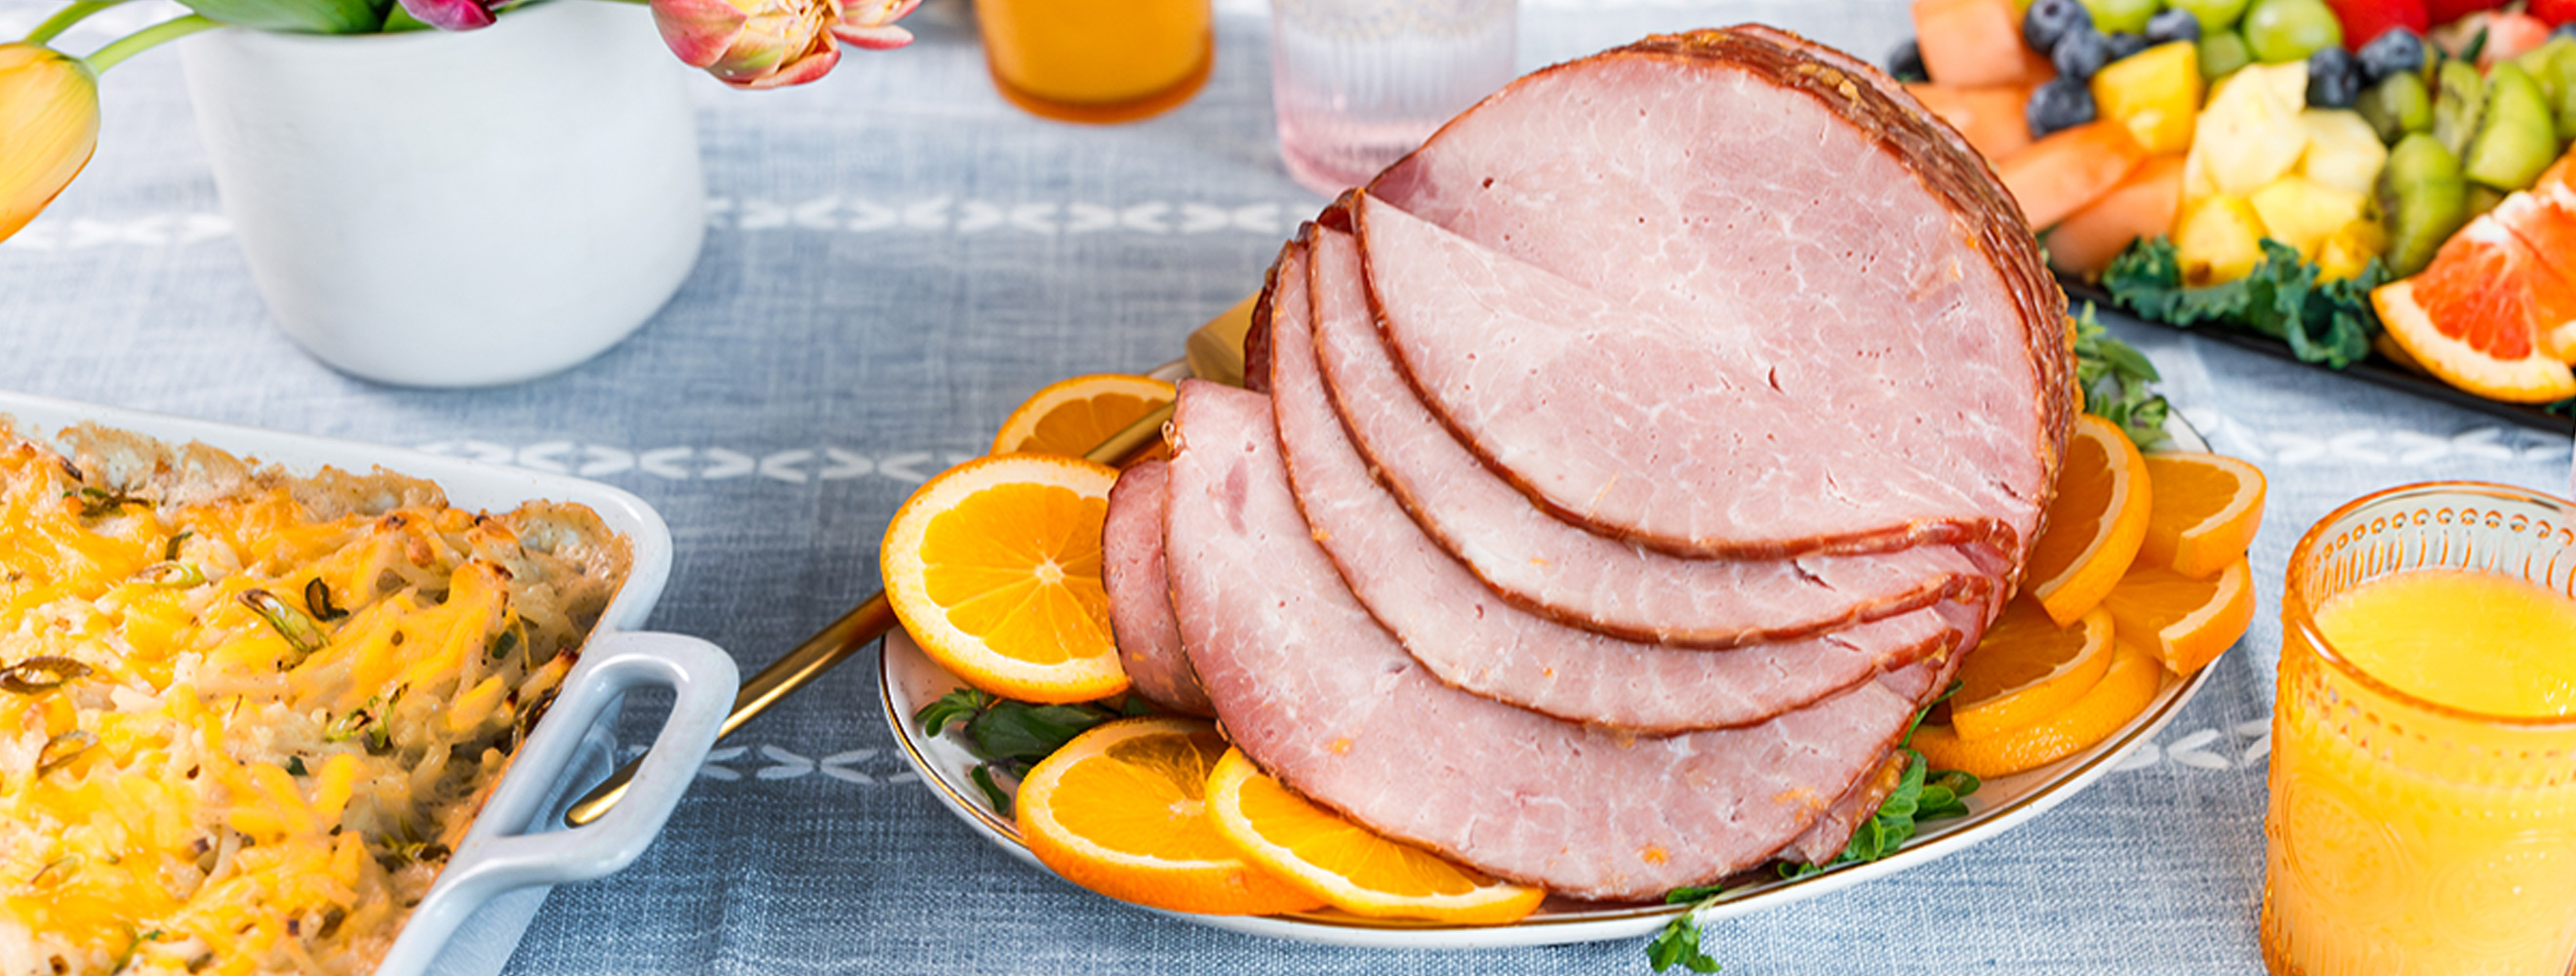 a sliced ham on a platter set on a table with a casserole, orange juice and sliced fruit platter.